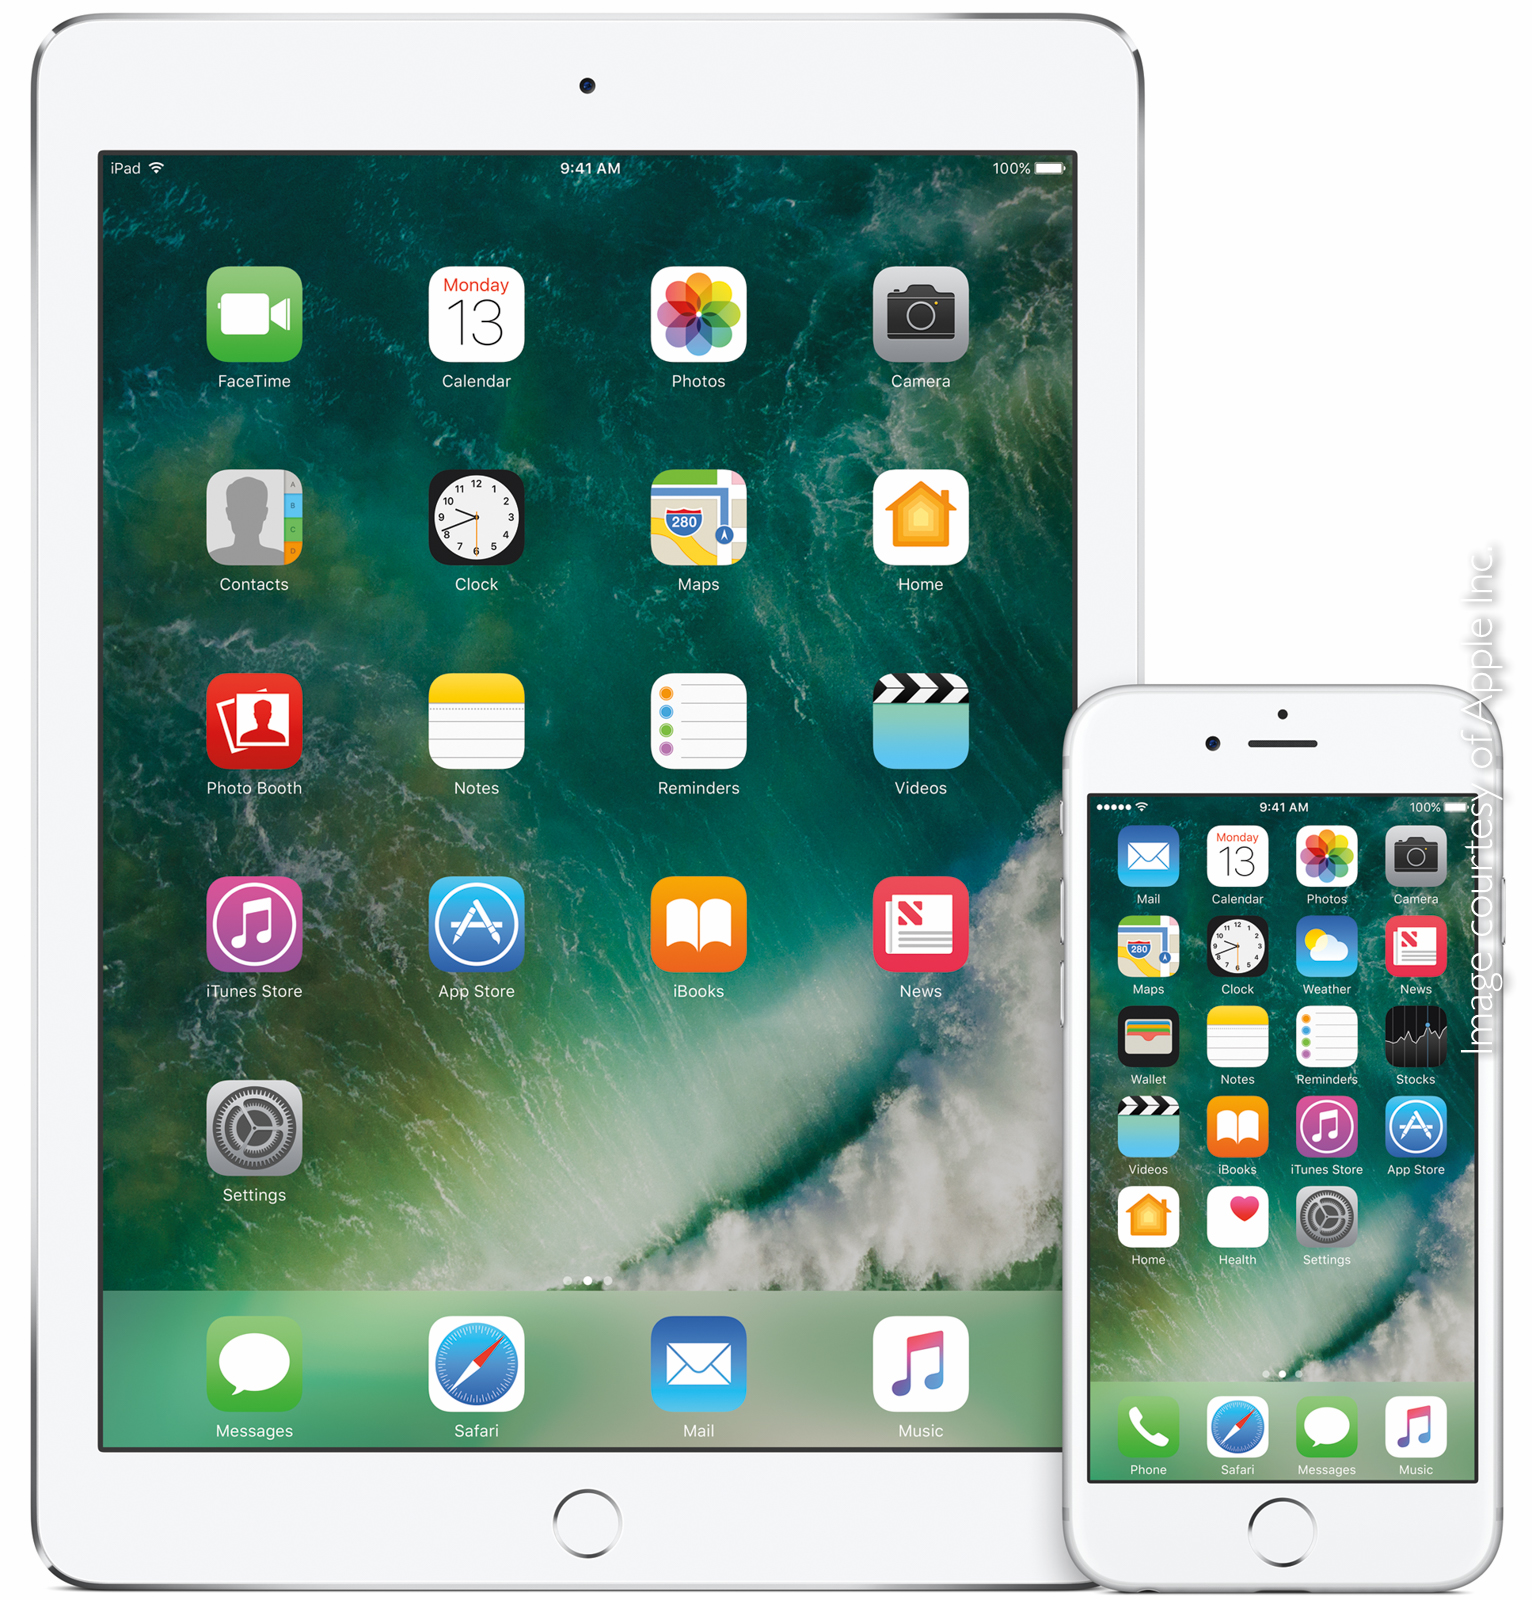 Apple iOS 10 on iPad and iPhone